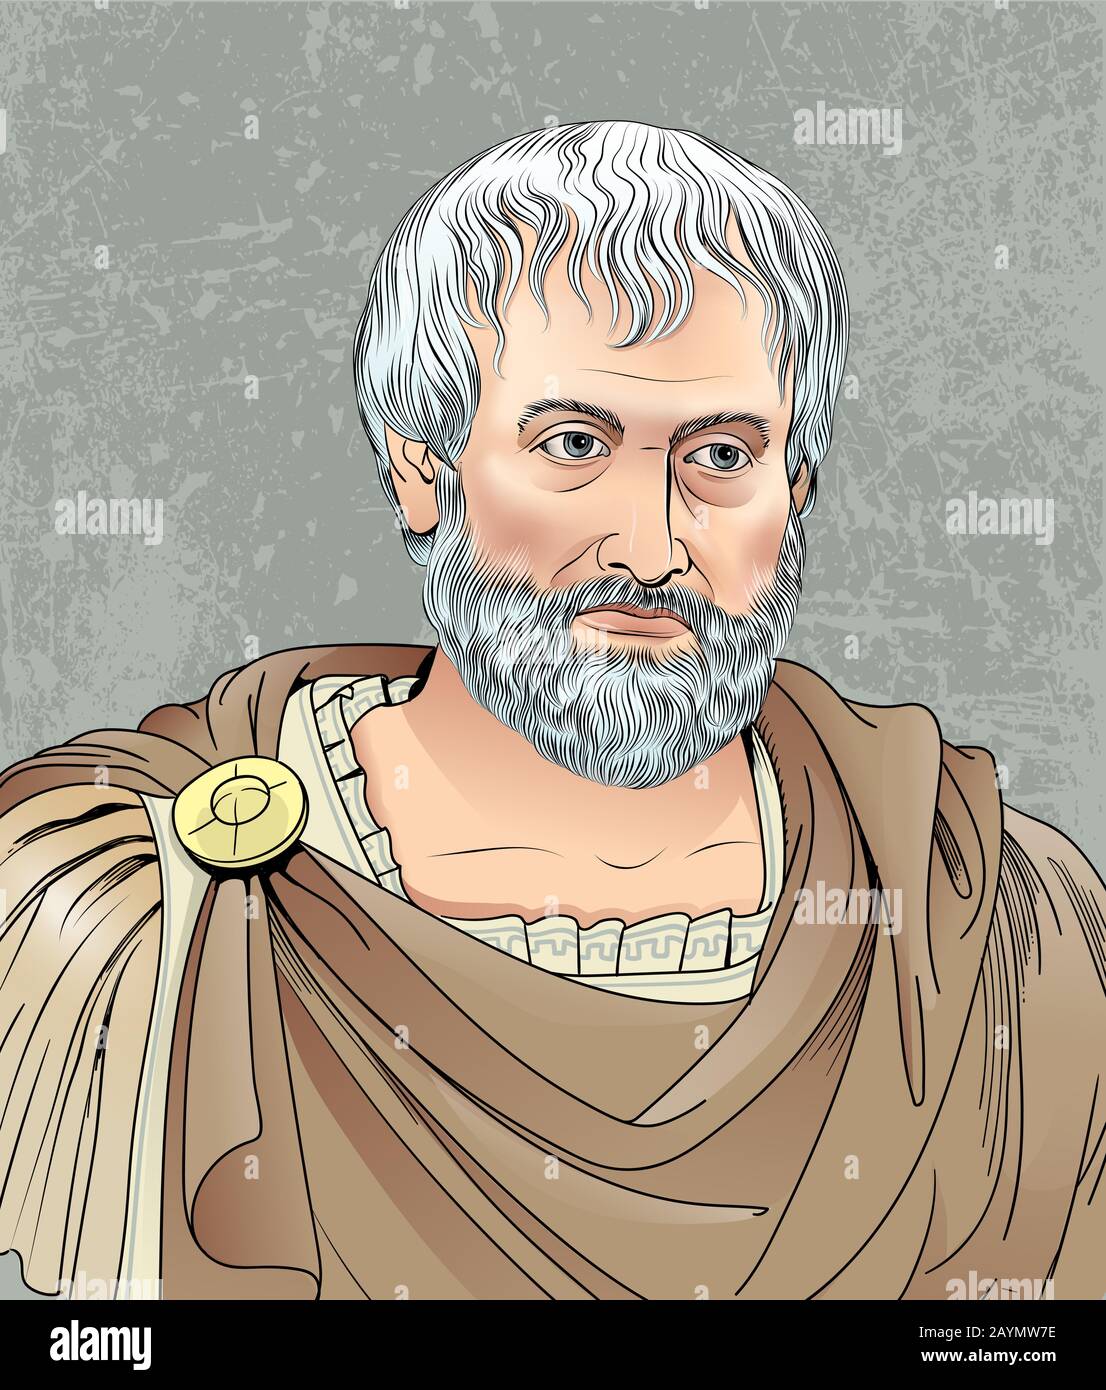 Aristotle vector portrait in line art. He was an ancient Greek philosopher, scientist and author. Stock Vector